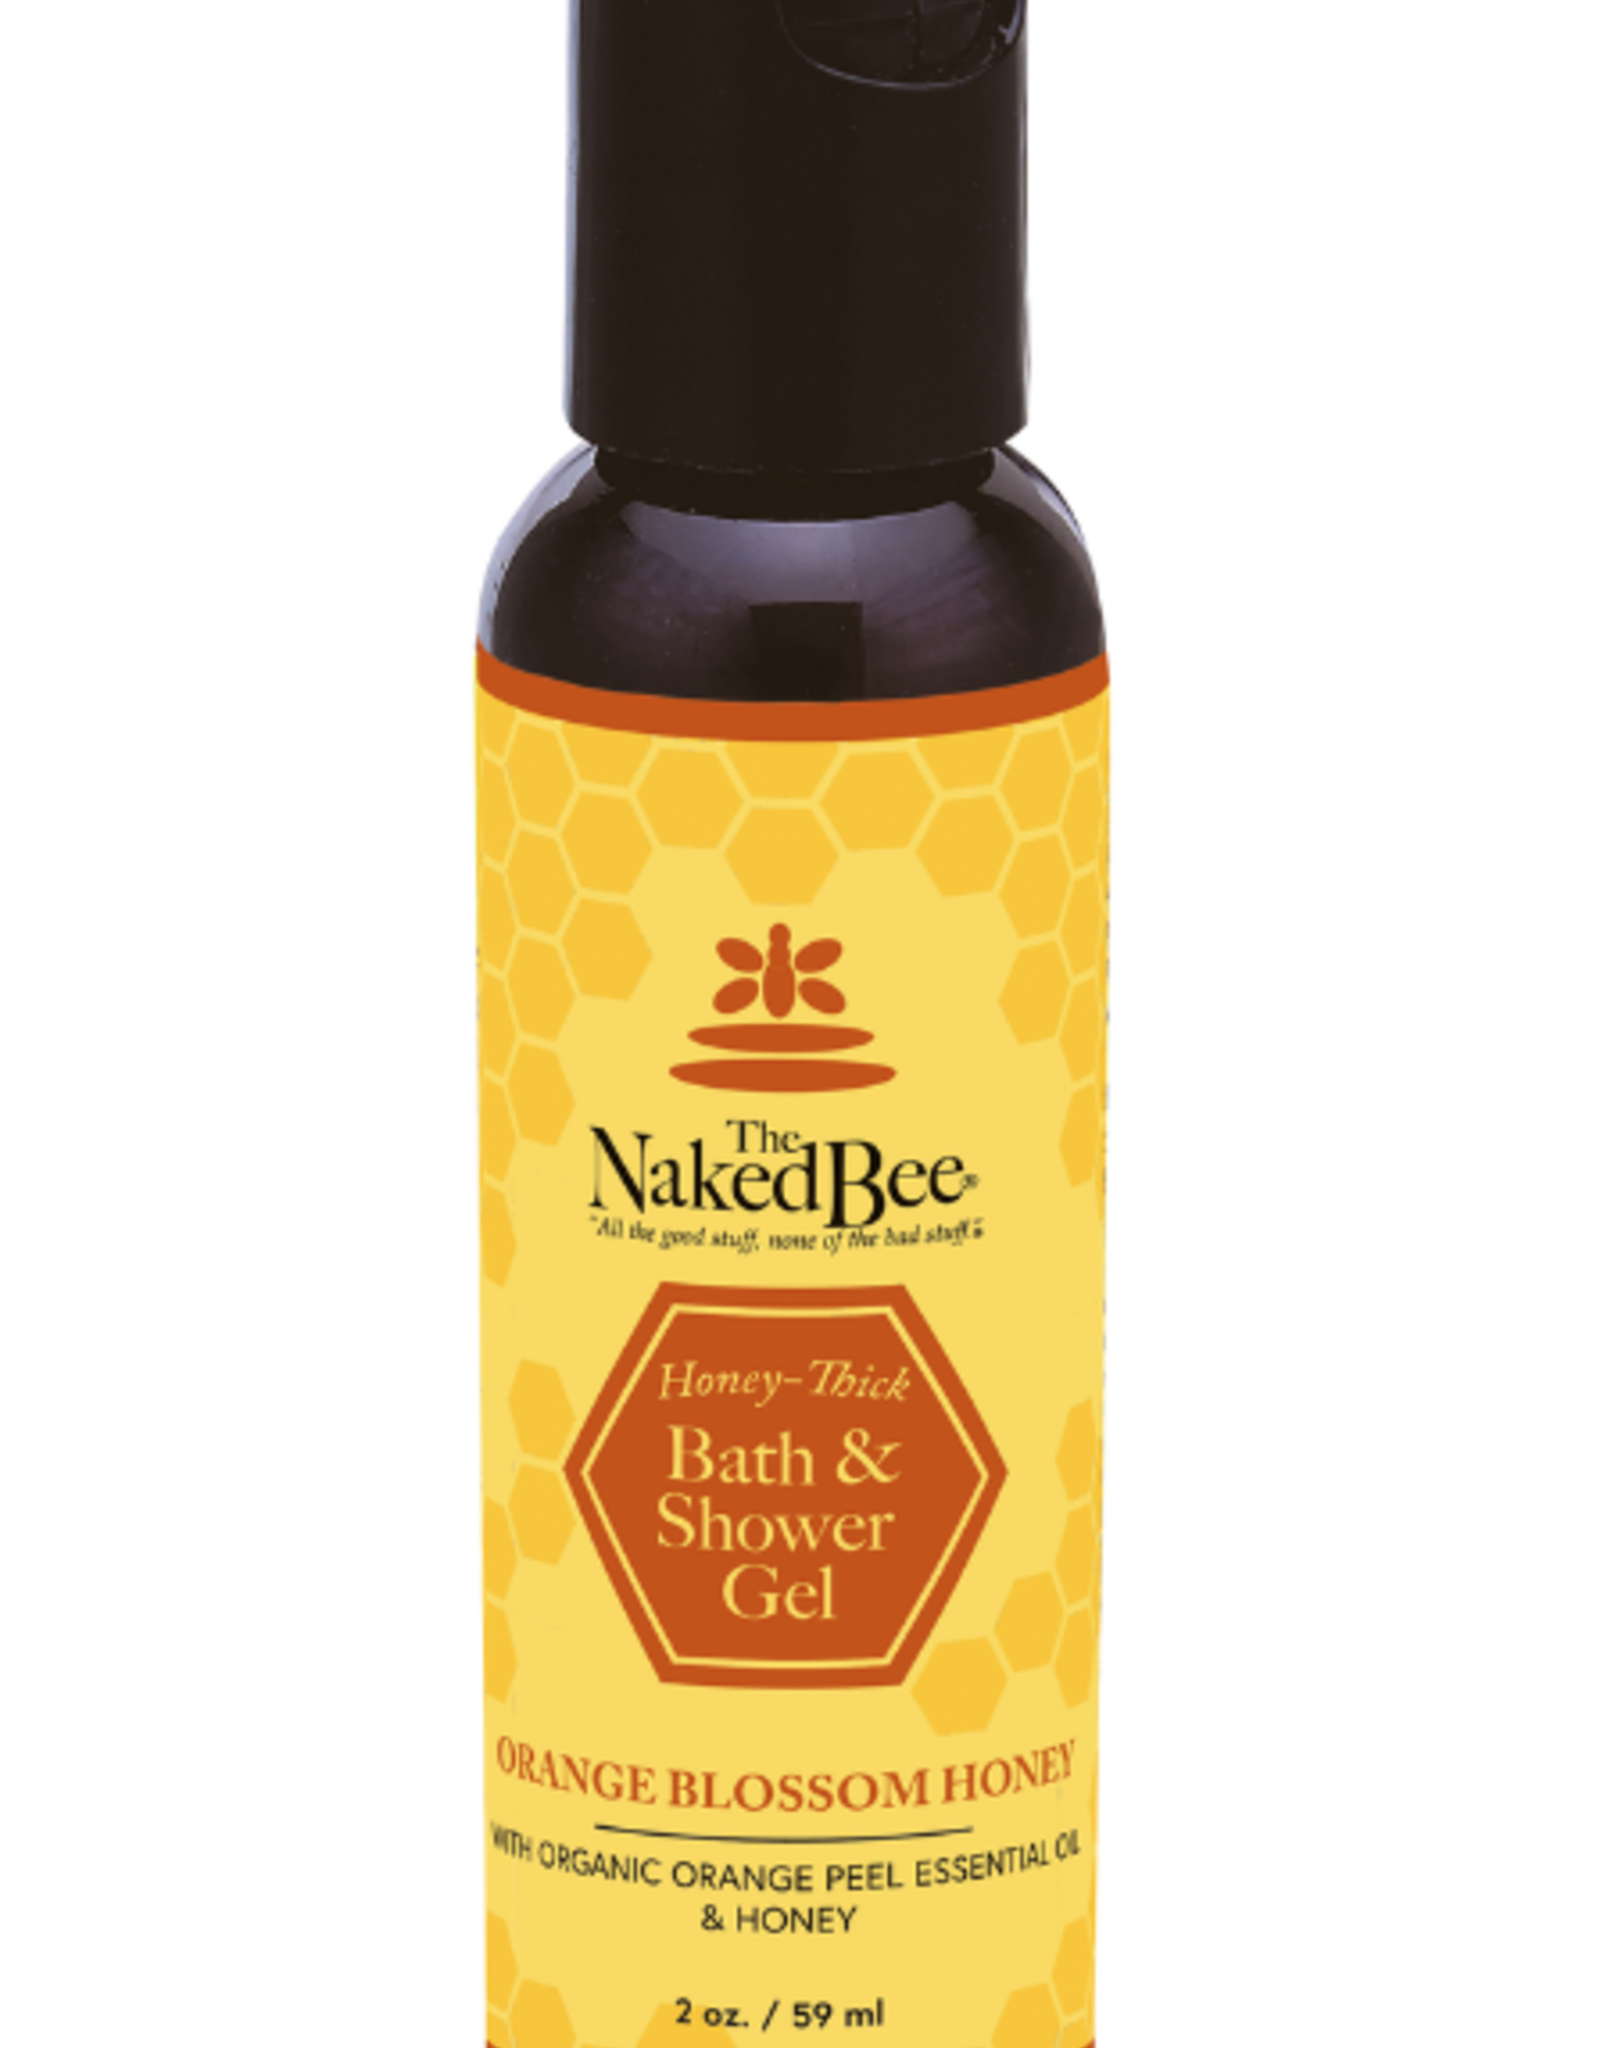 Naked Bee Orange Blossom Honey Bath & Shower Gel 2oz